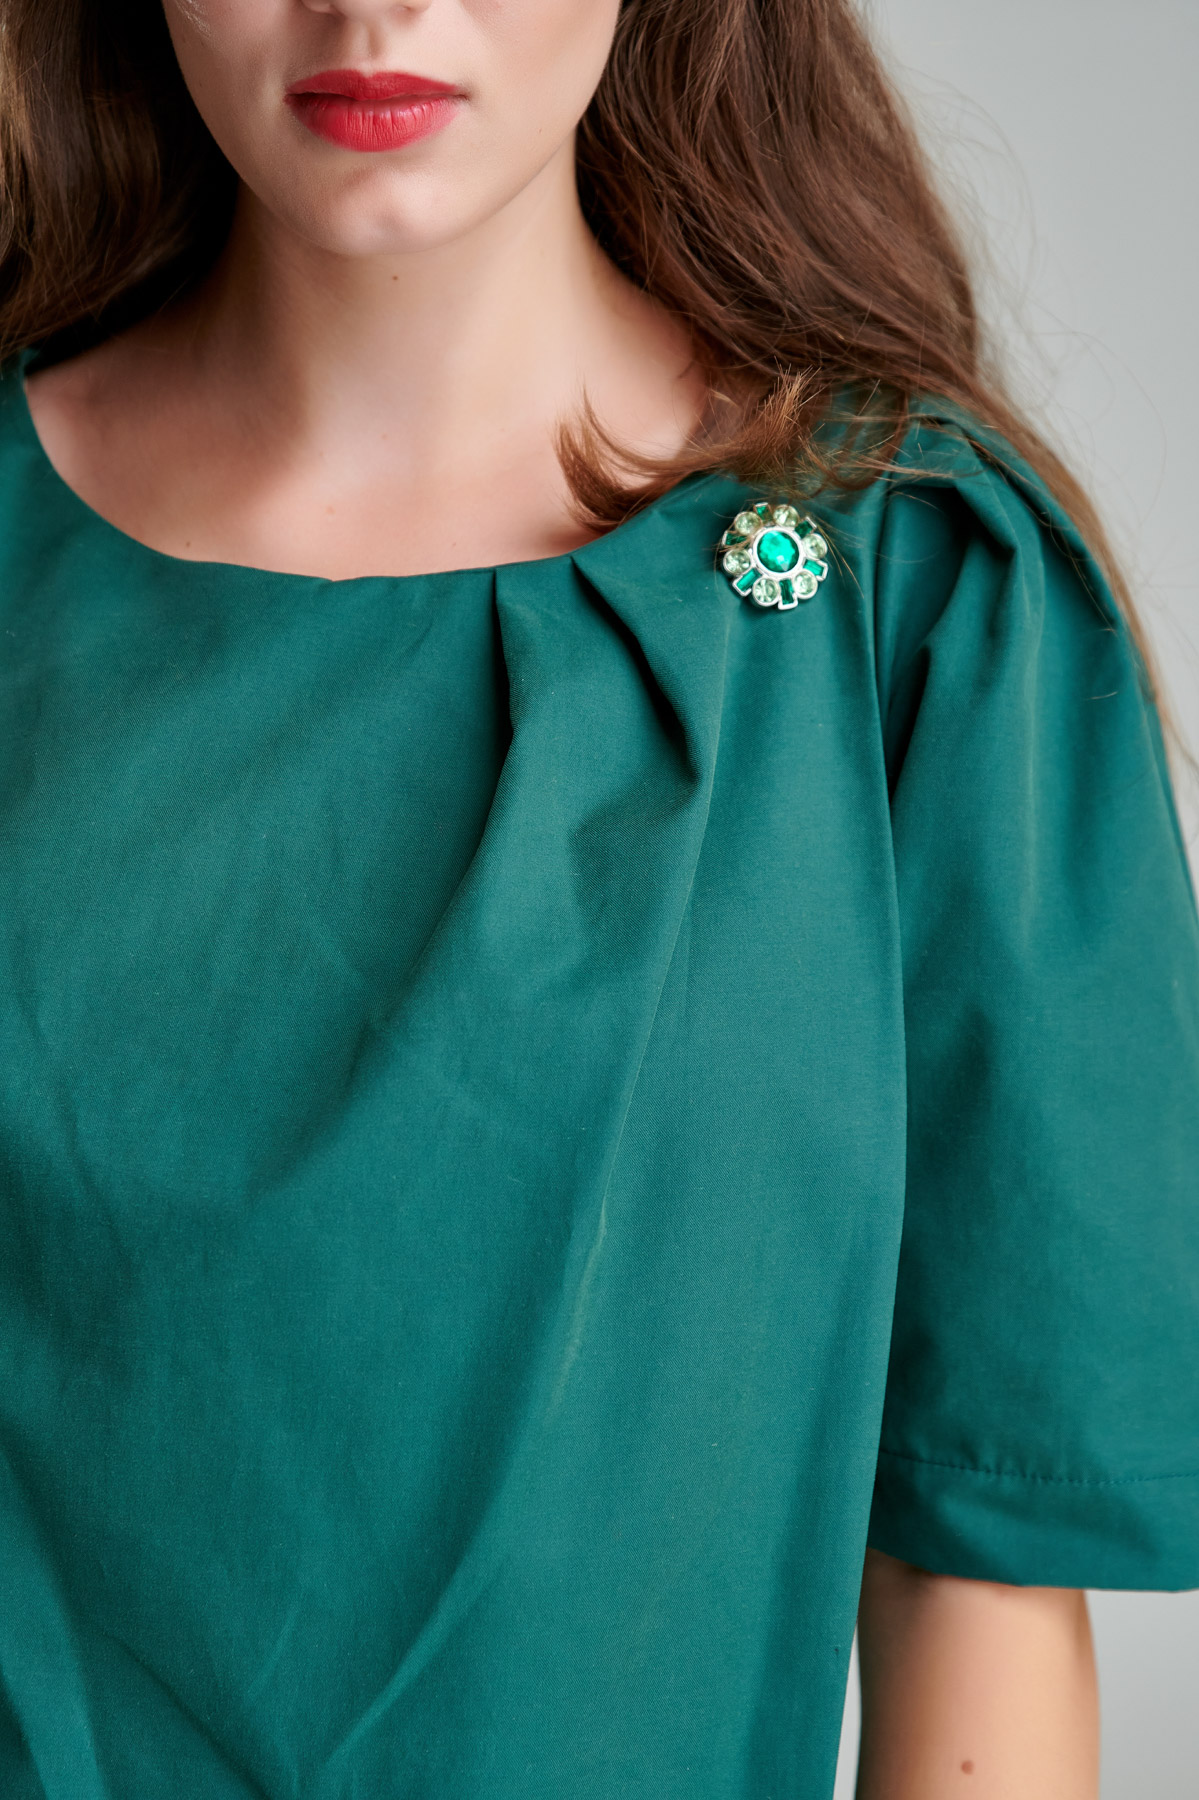 OLIVIER emerald green dress. Natural fabrics, original design, handmade embroidery